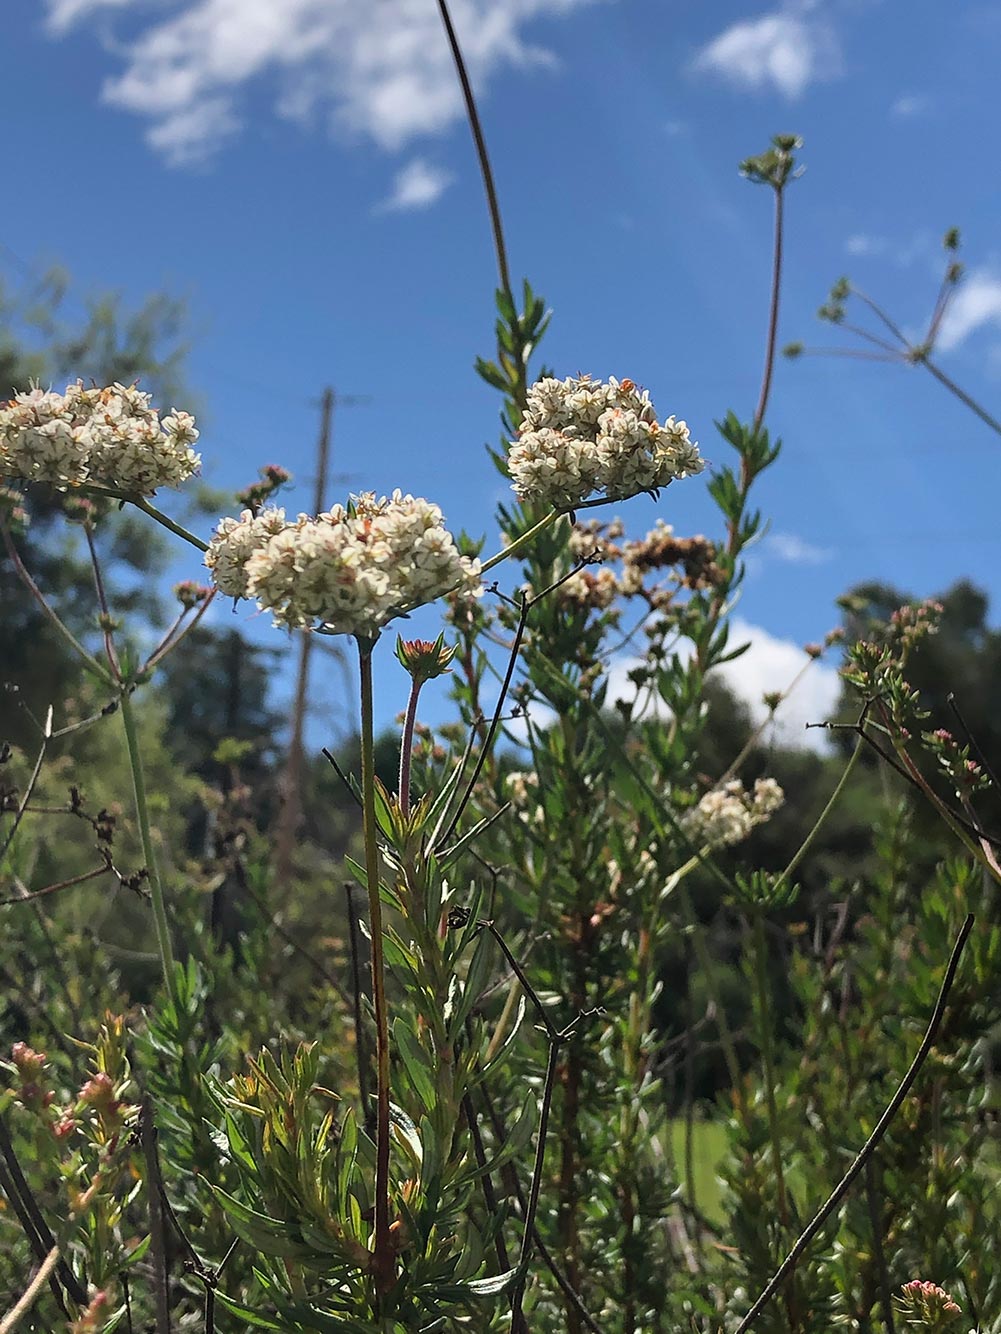 California buckwheat (Eriogonum fasciculatum) flowers with a backdrop of a blue sky and green grass